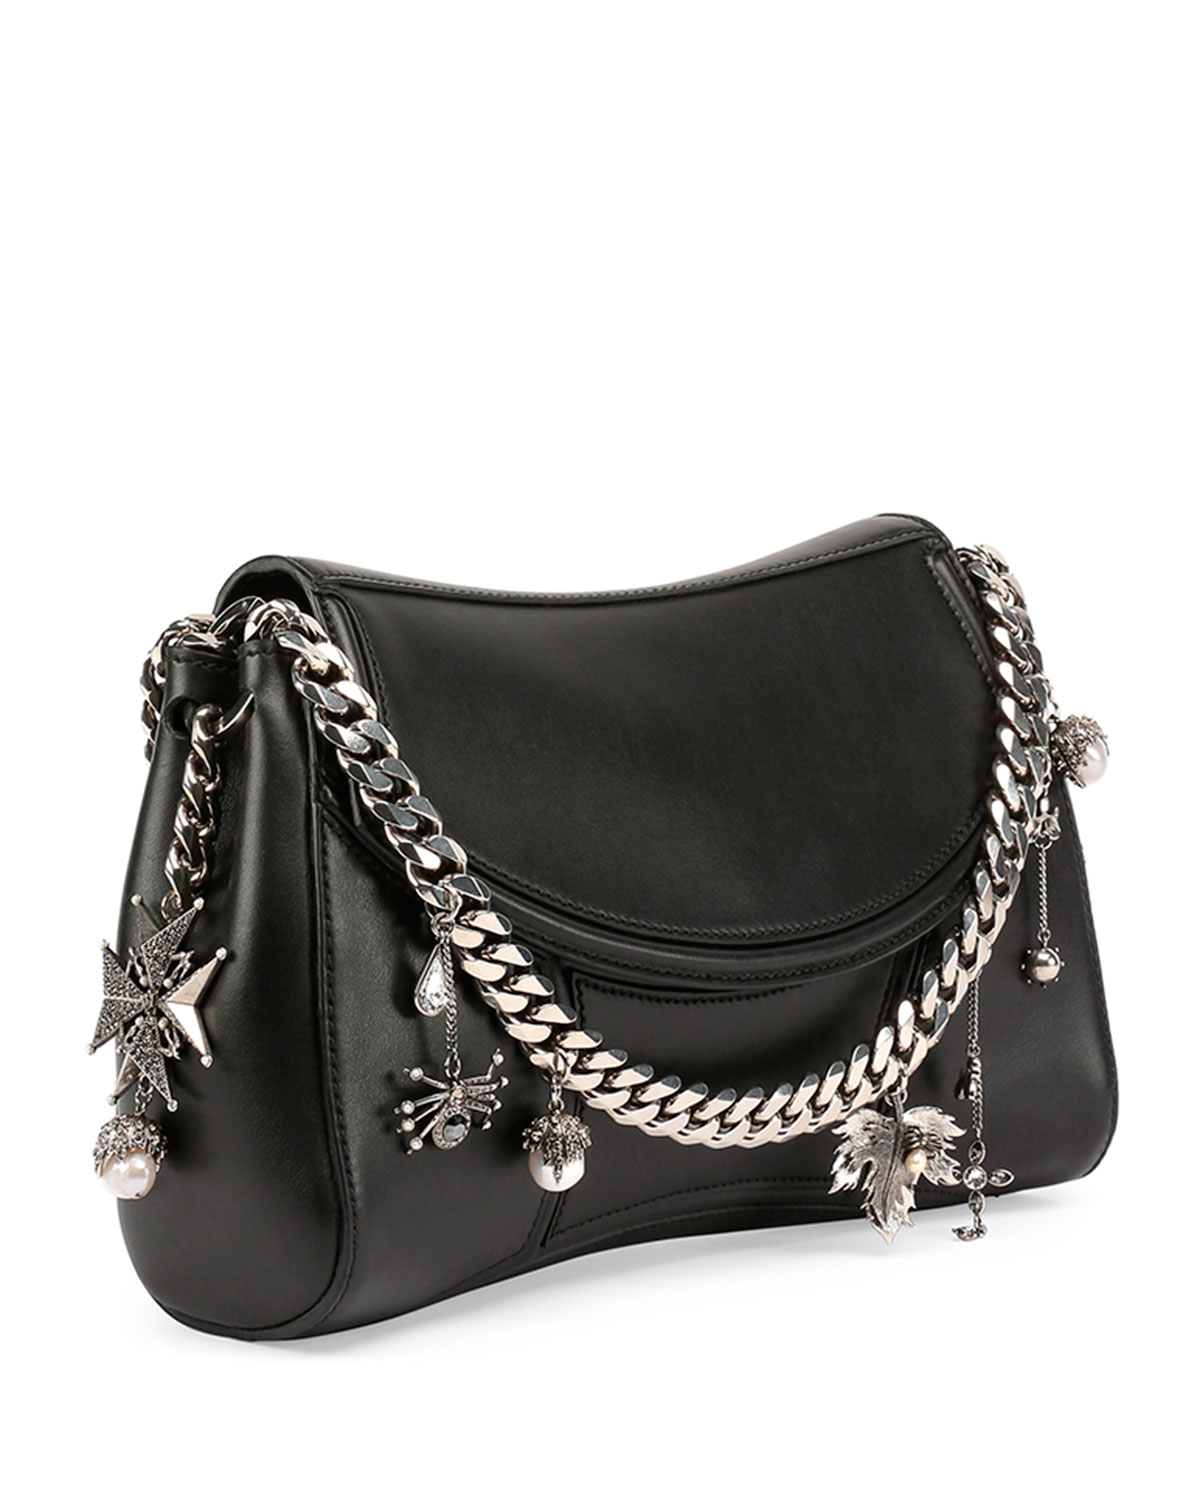 Alexander McQueen Medallion Leather Chain-strap Shoulder Bag in Black - Lyst